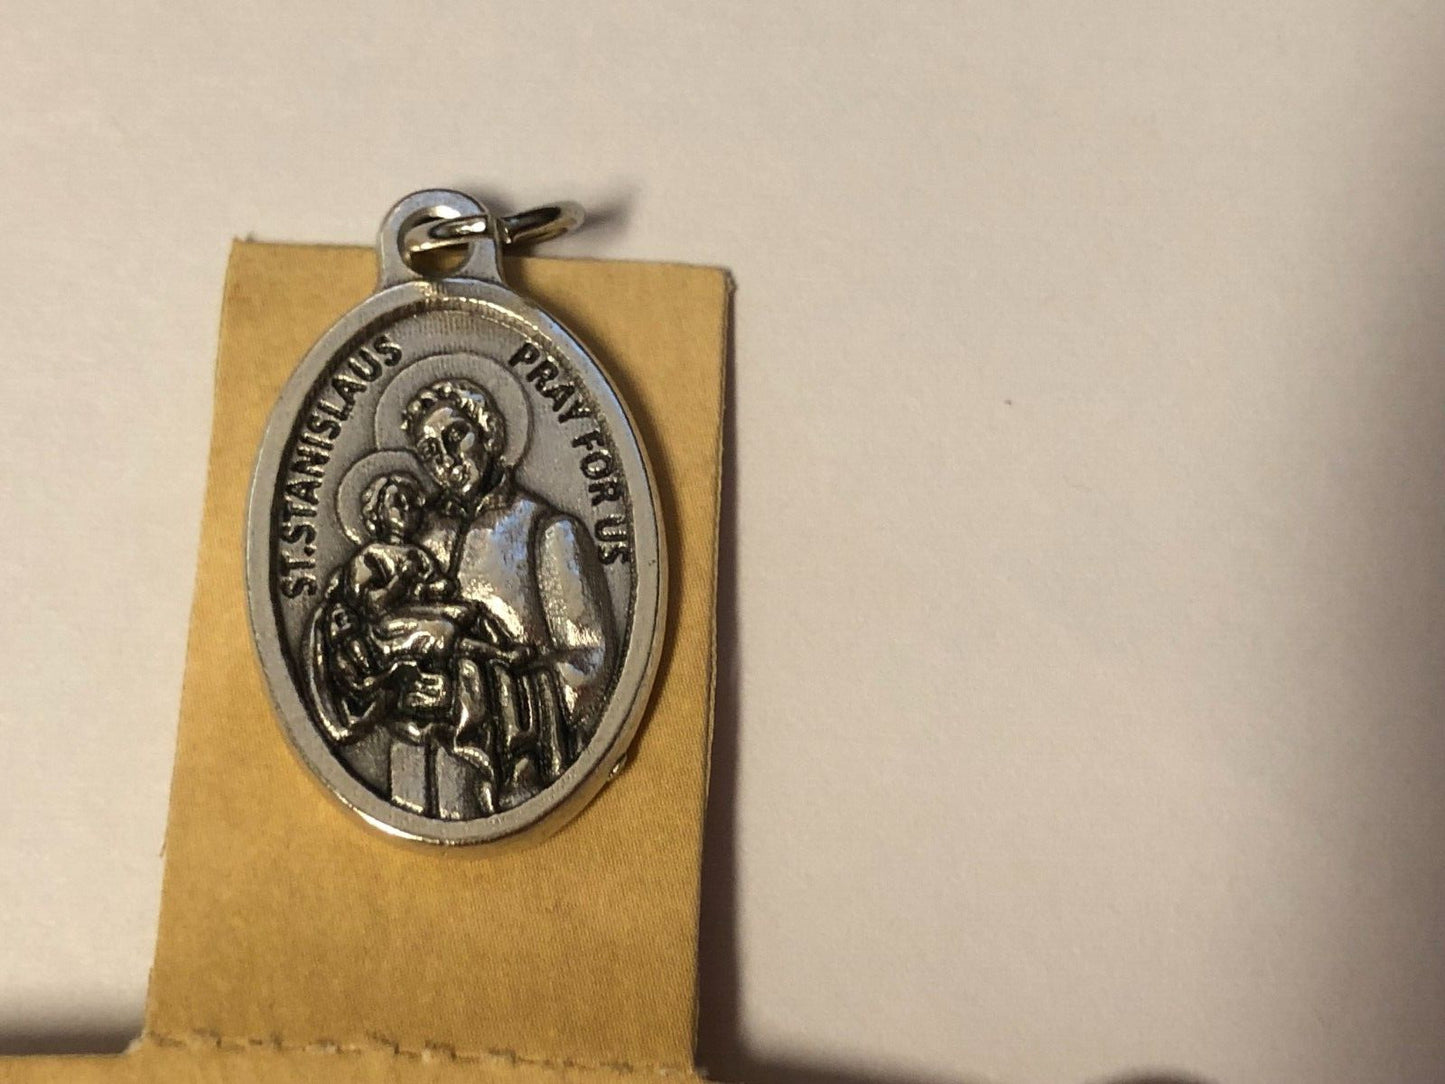 Saint Stanislaus Kostkas Bio,Prayer folder + Medal, New - Bob and Penny Lord